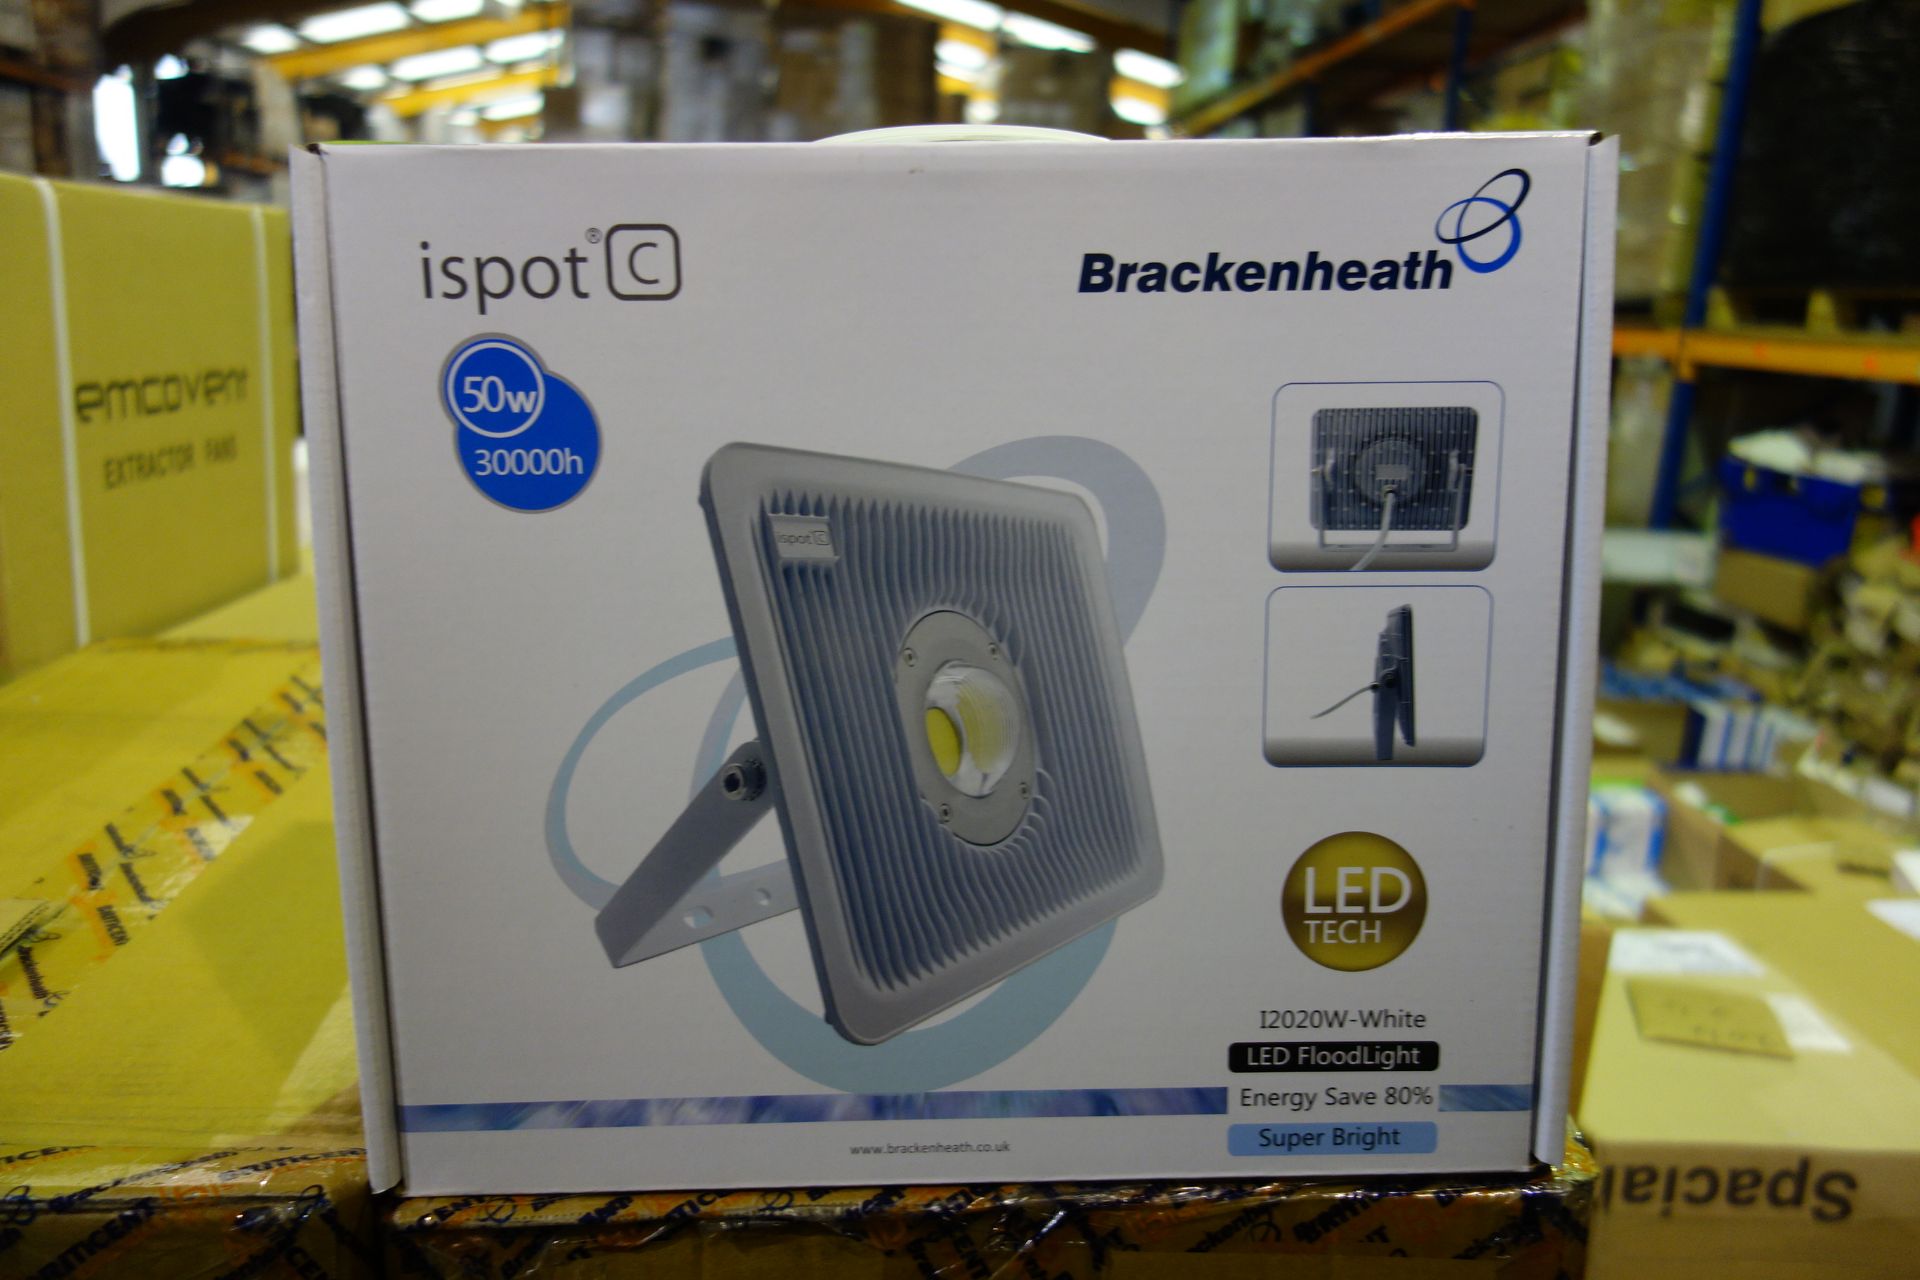 4 X Brakenheath Ispot 12020w 50w White LED Flood Light